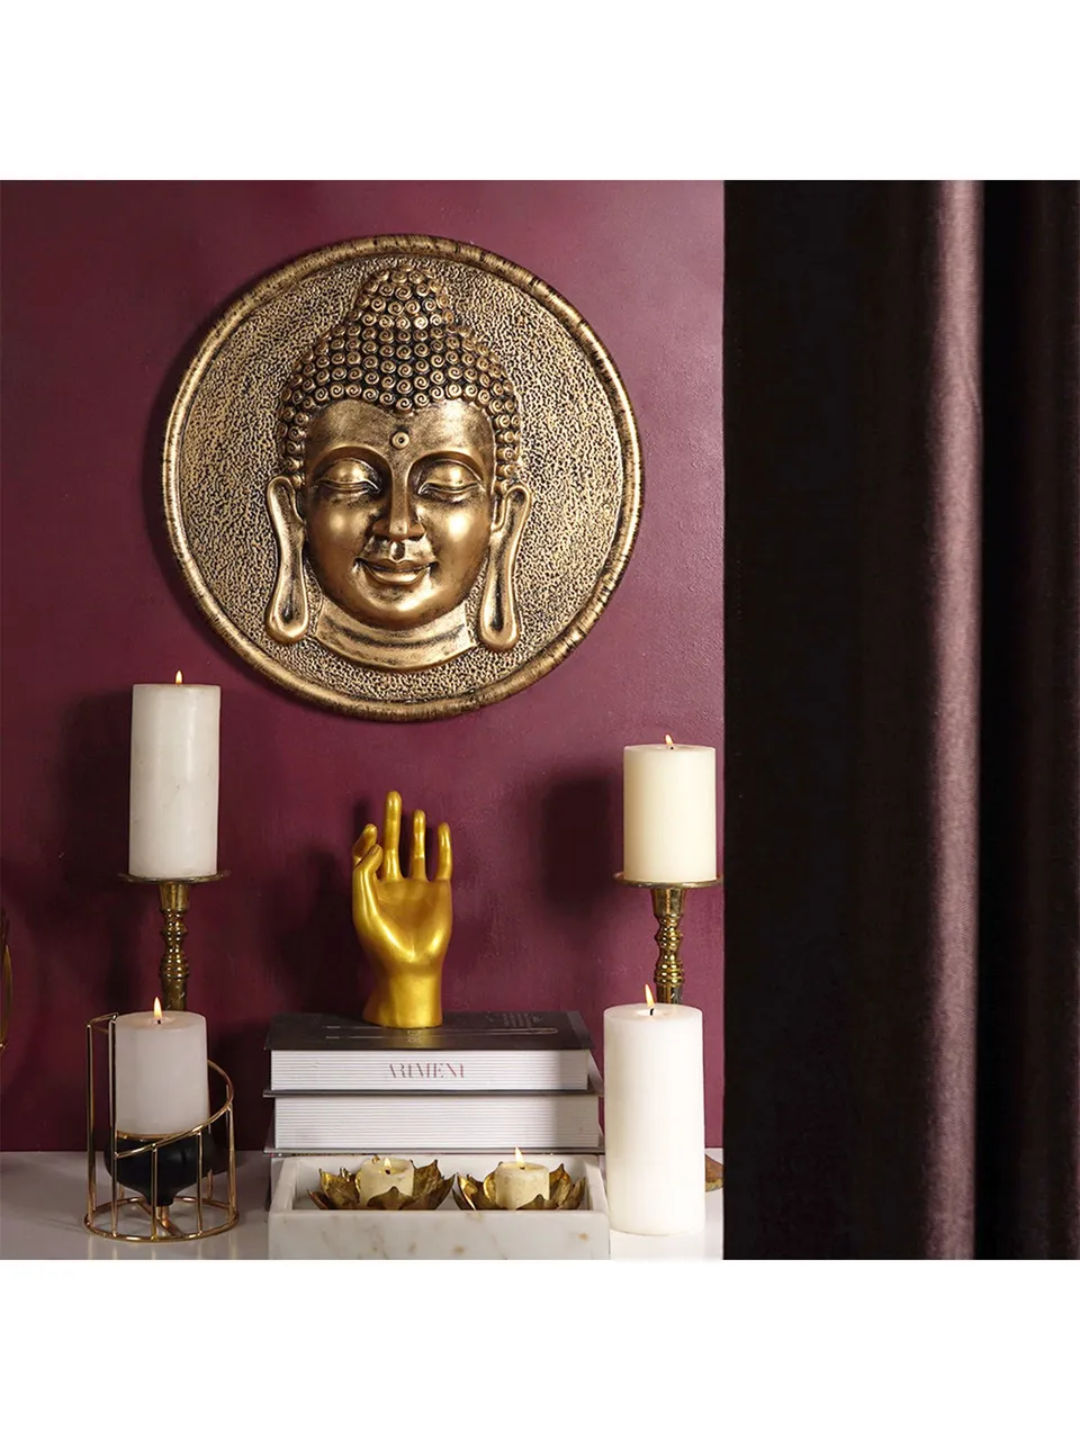 Surreal Meditative Buddha Head - Gold